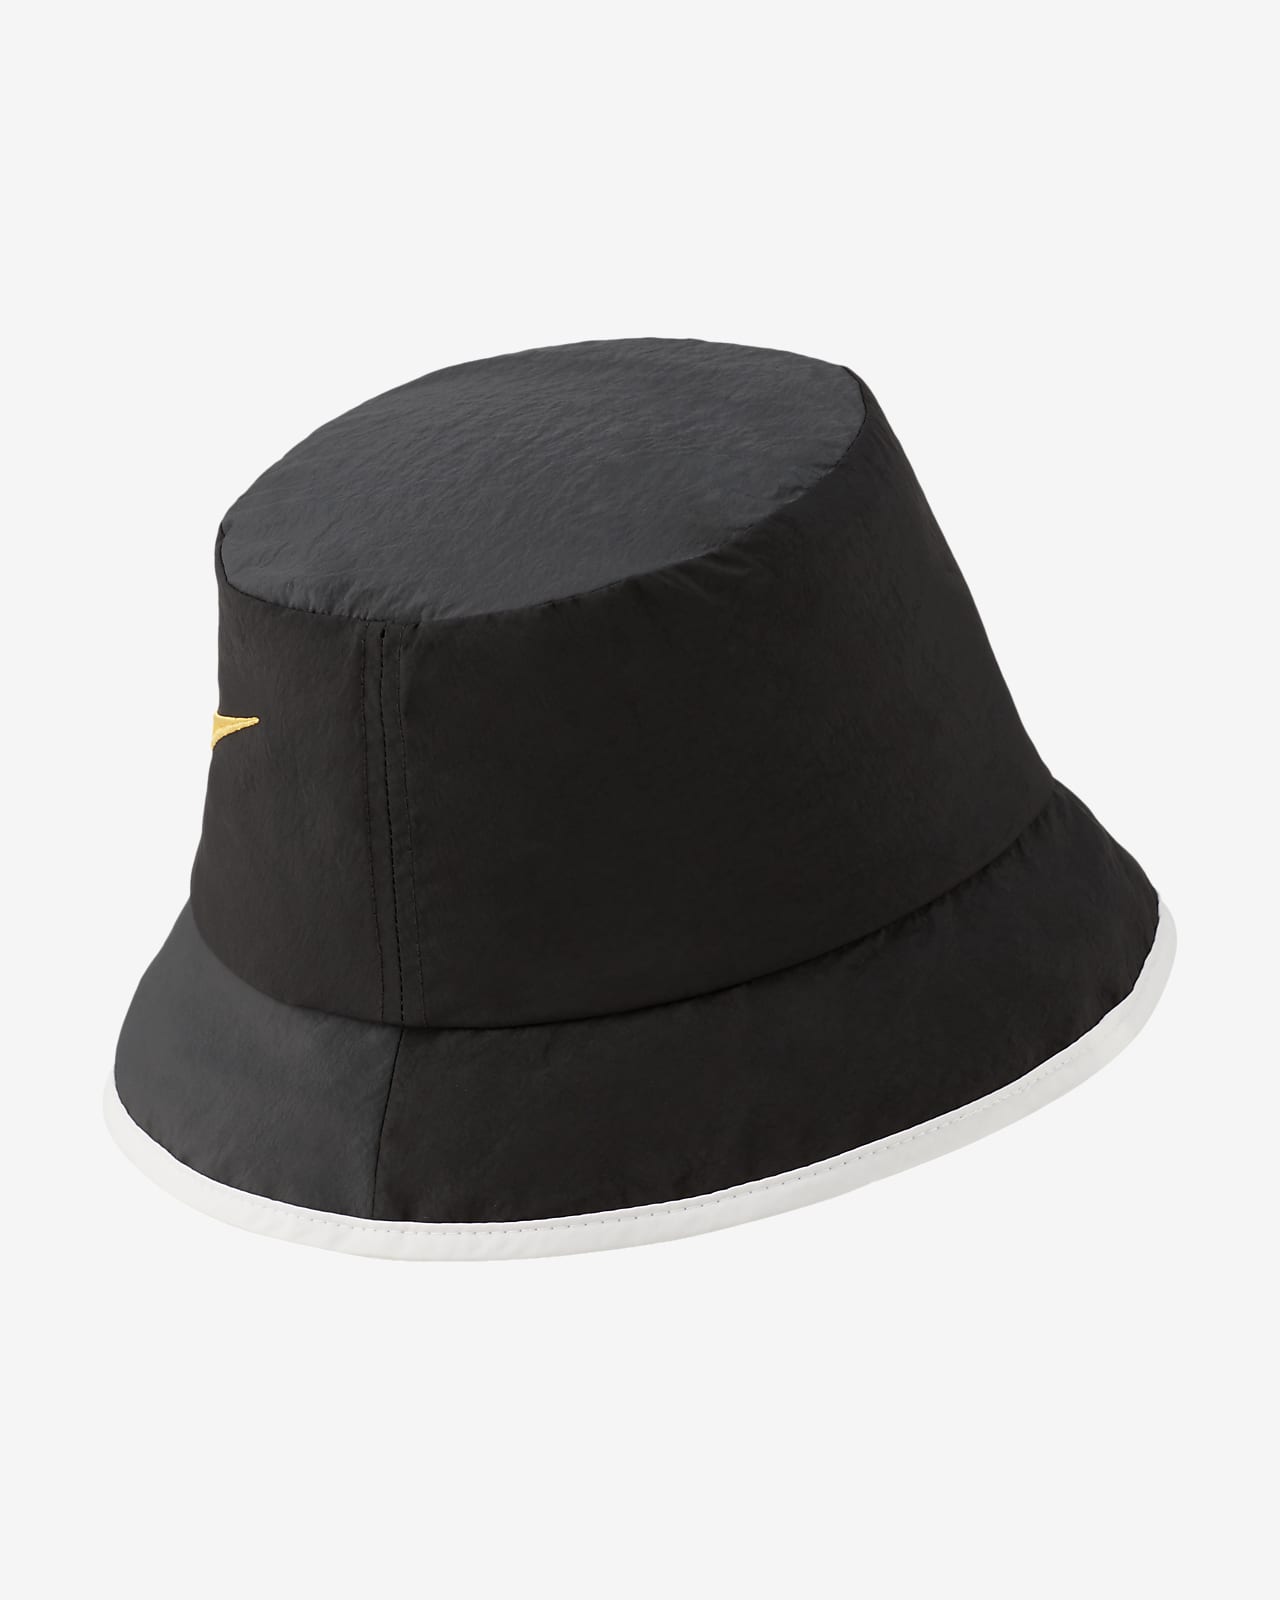 Formuler Watt attendez all black nike bucket hat canada local mature ...